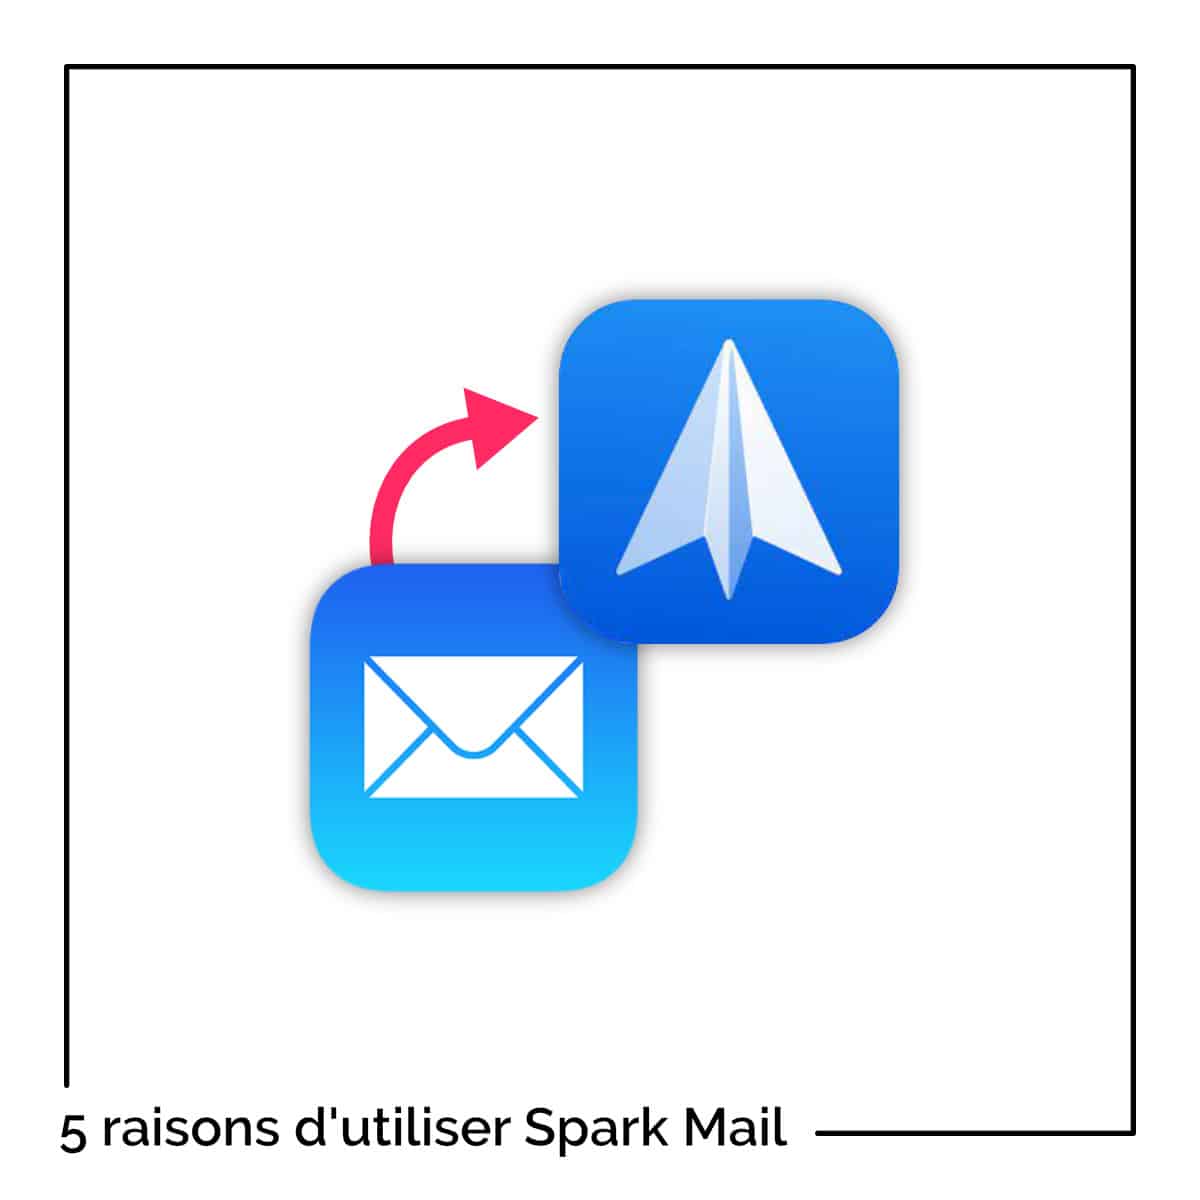 Spark mail